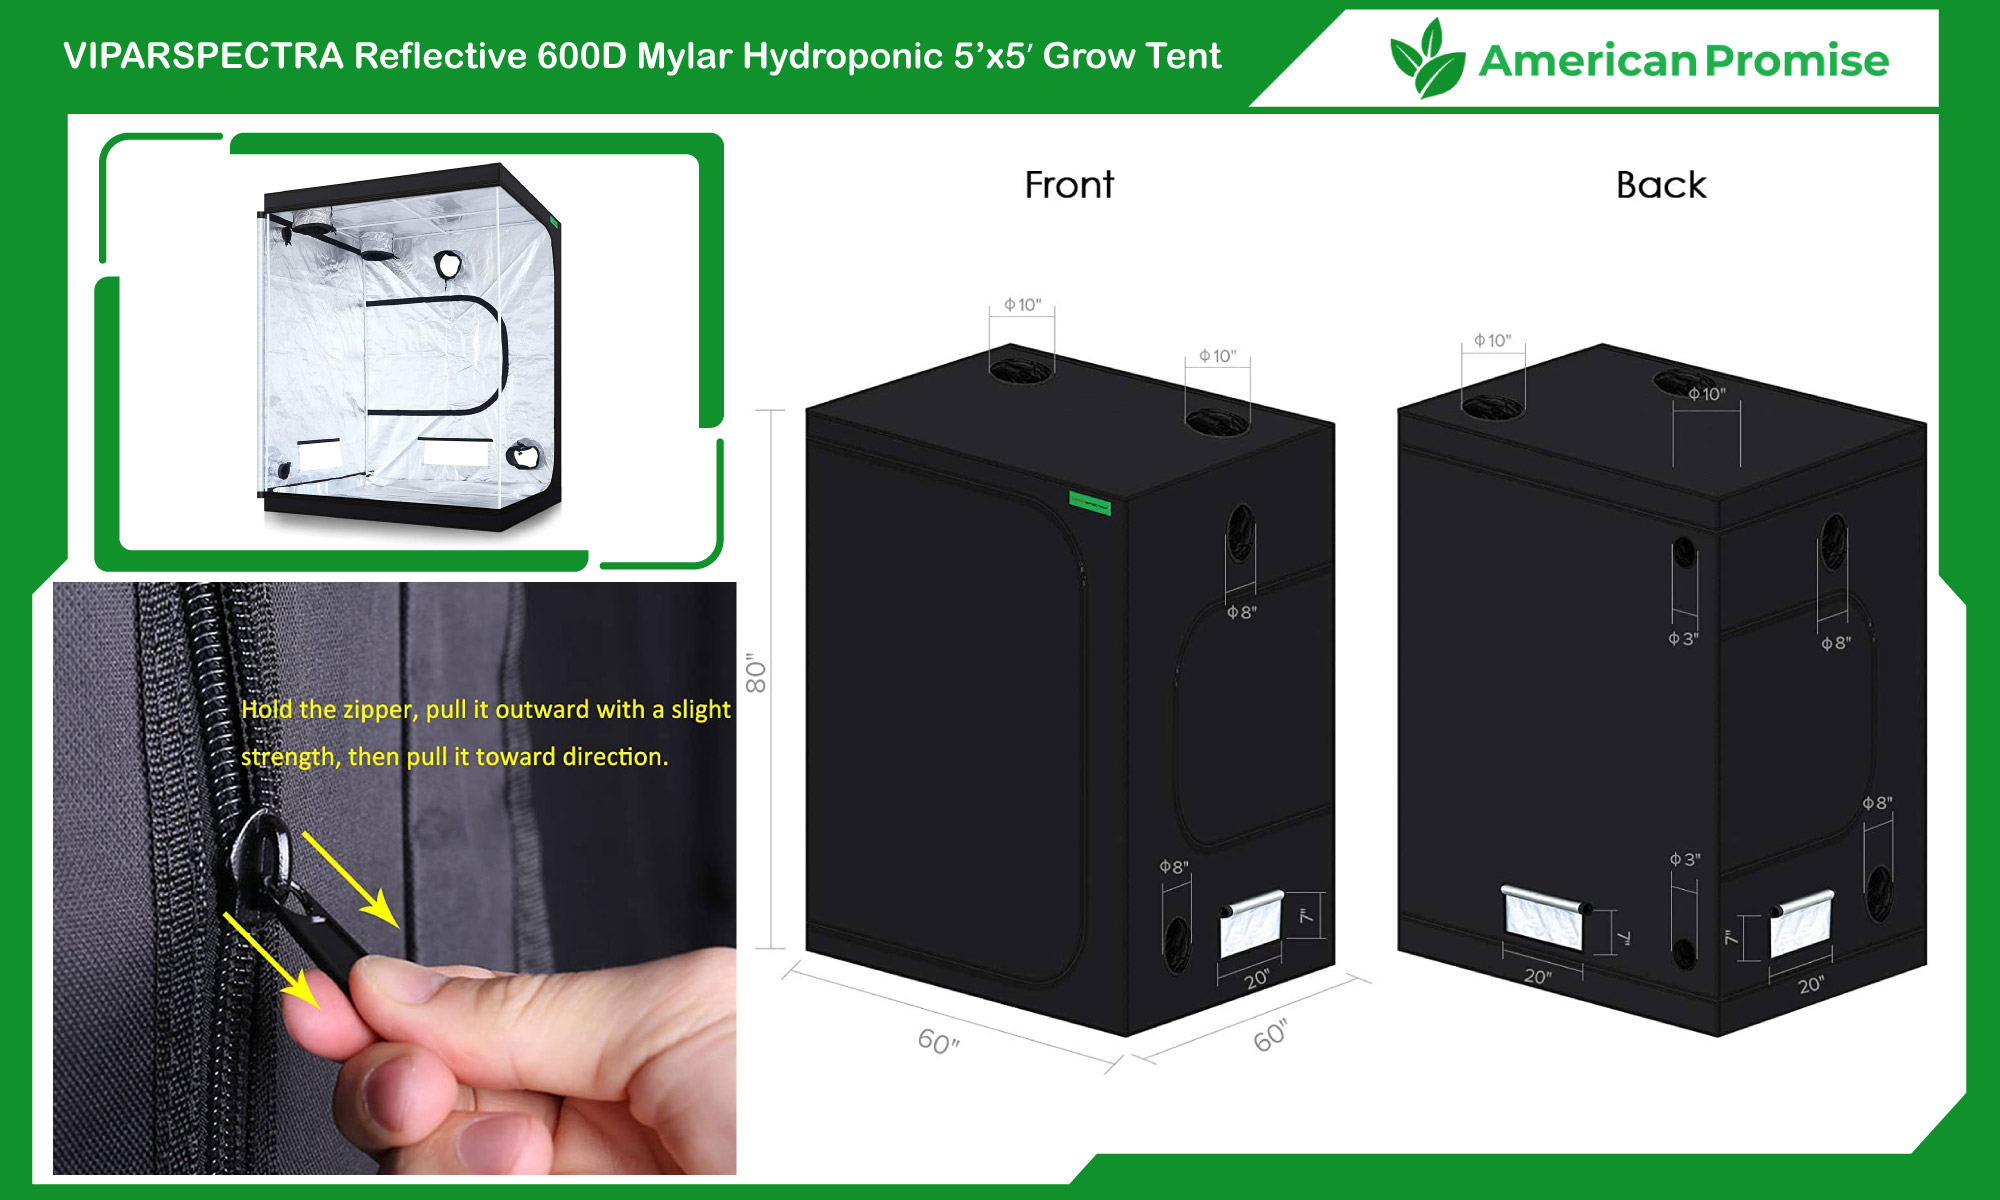 VIPARSPECTRA 60x60x80 Reflective 600D Mylar Hydroponic 5'x5' Tent